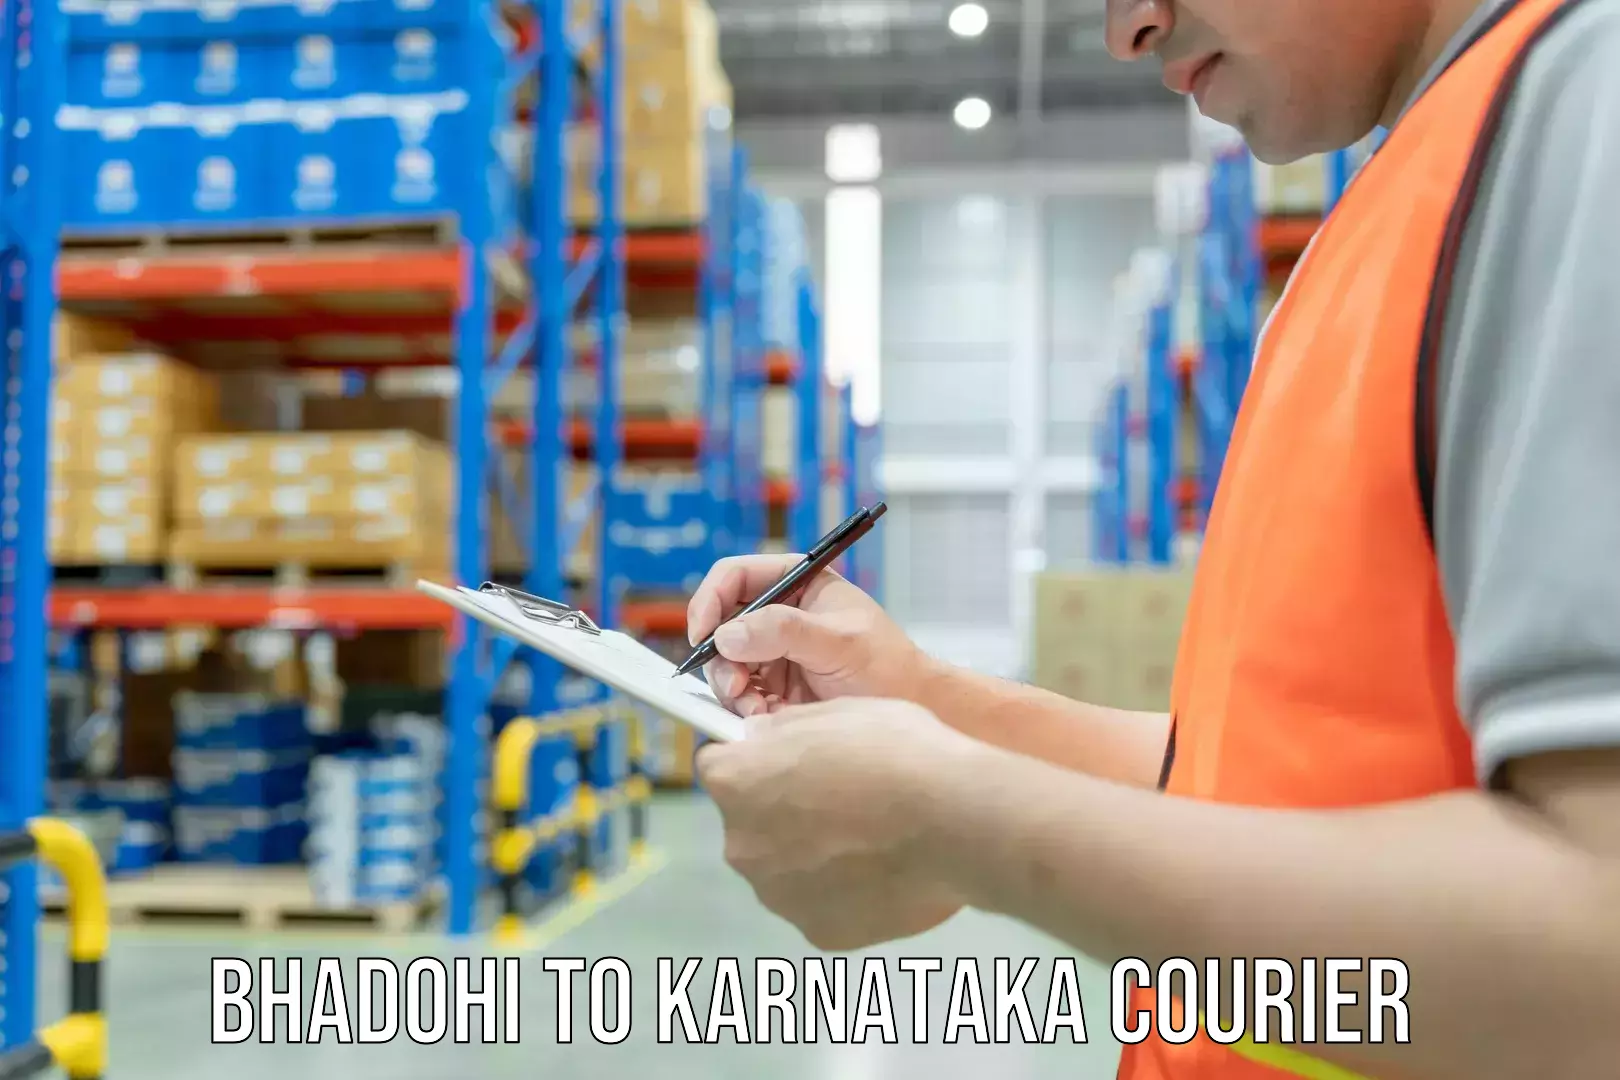 Courier service innovation Bhadohi to Karnataka